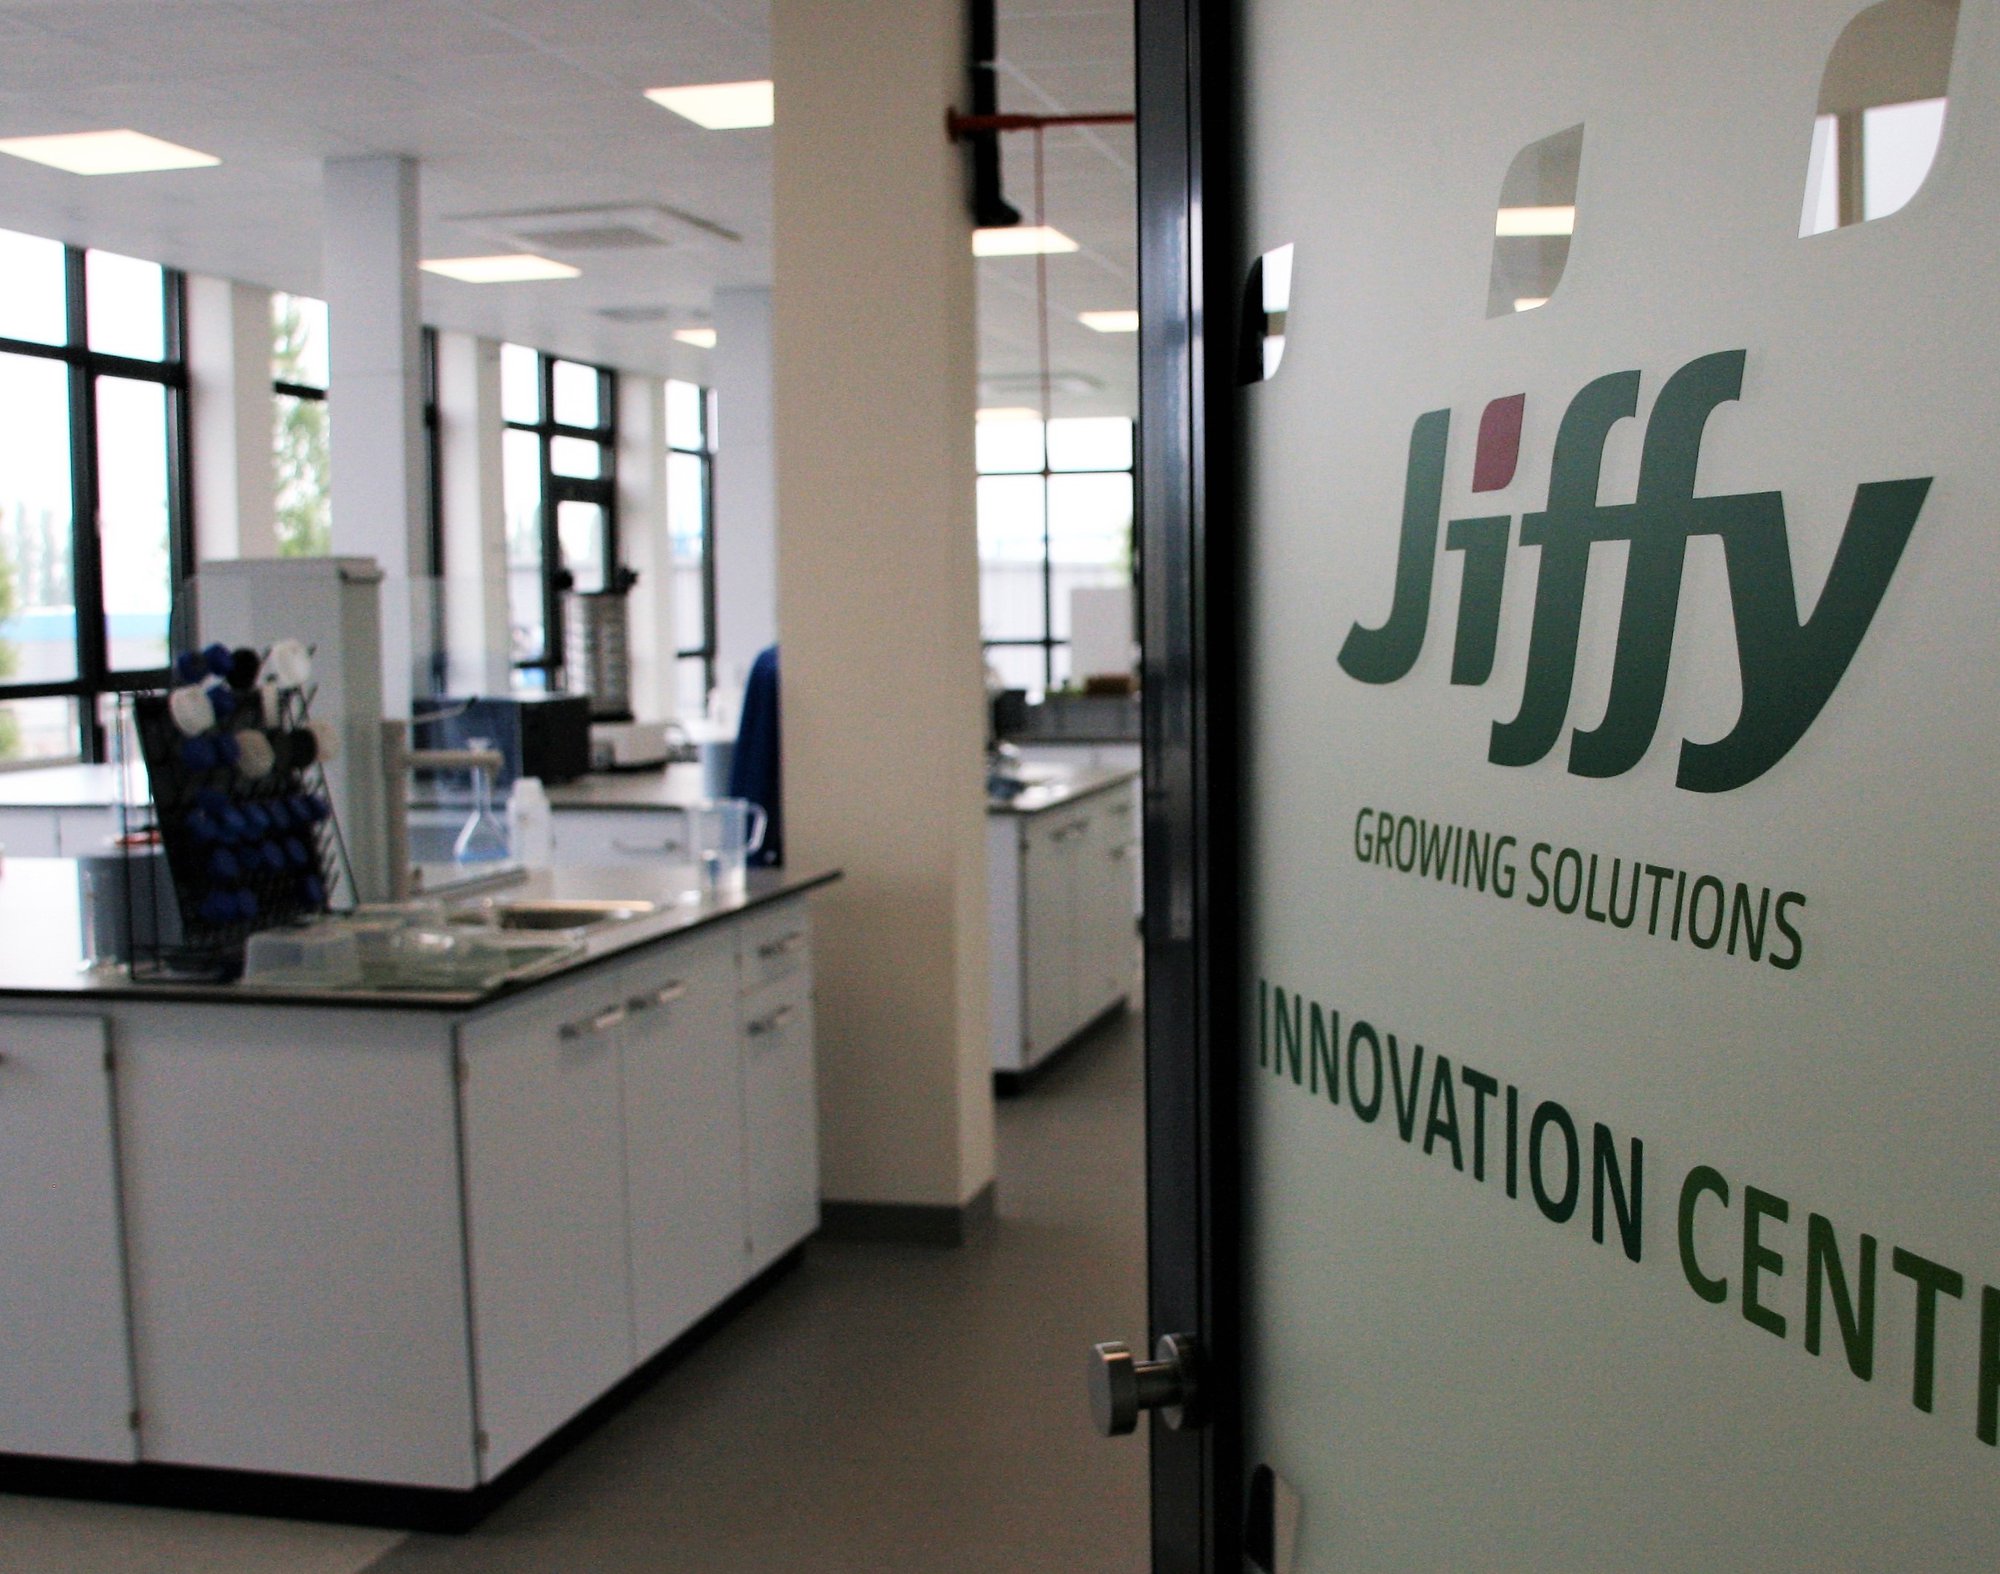 A glimpse of Jiffy's new Innovation Center